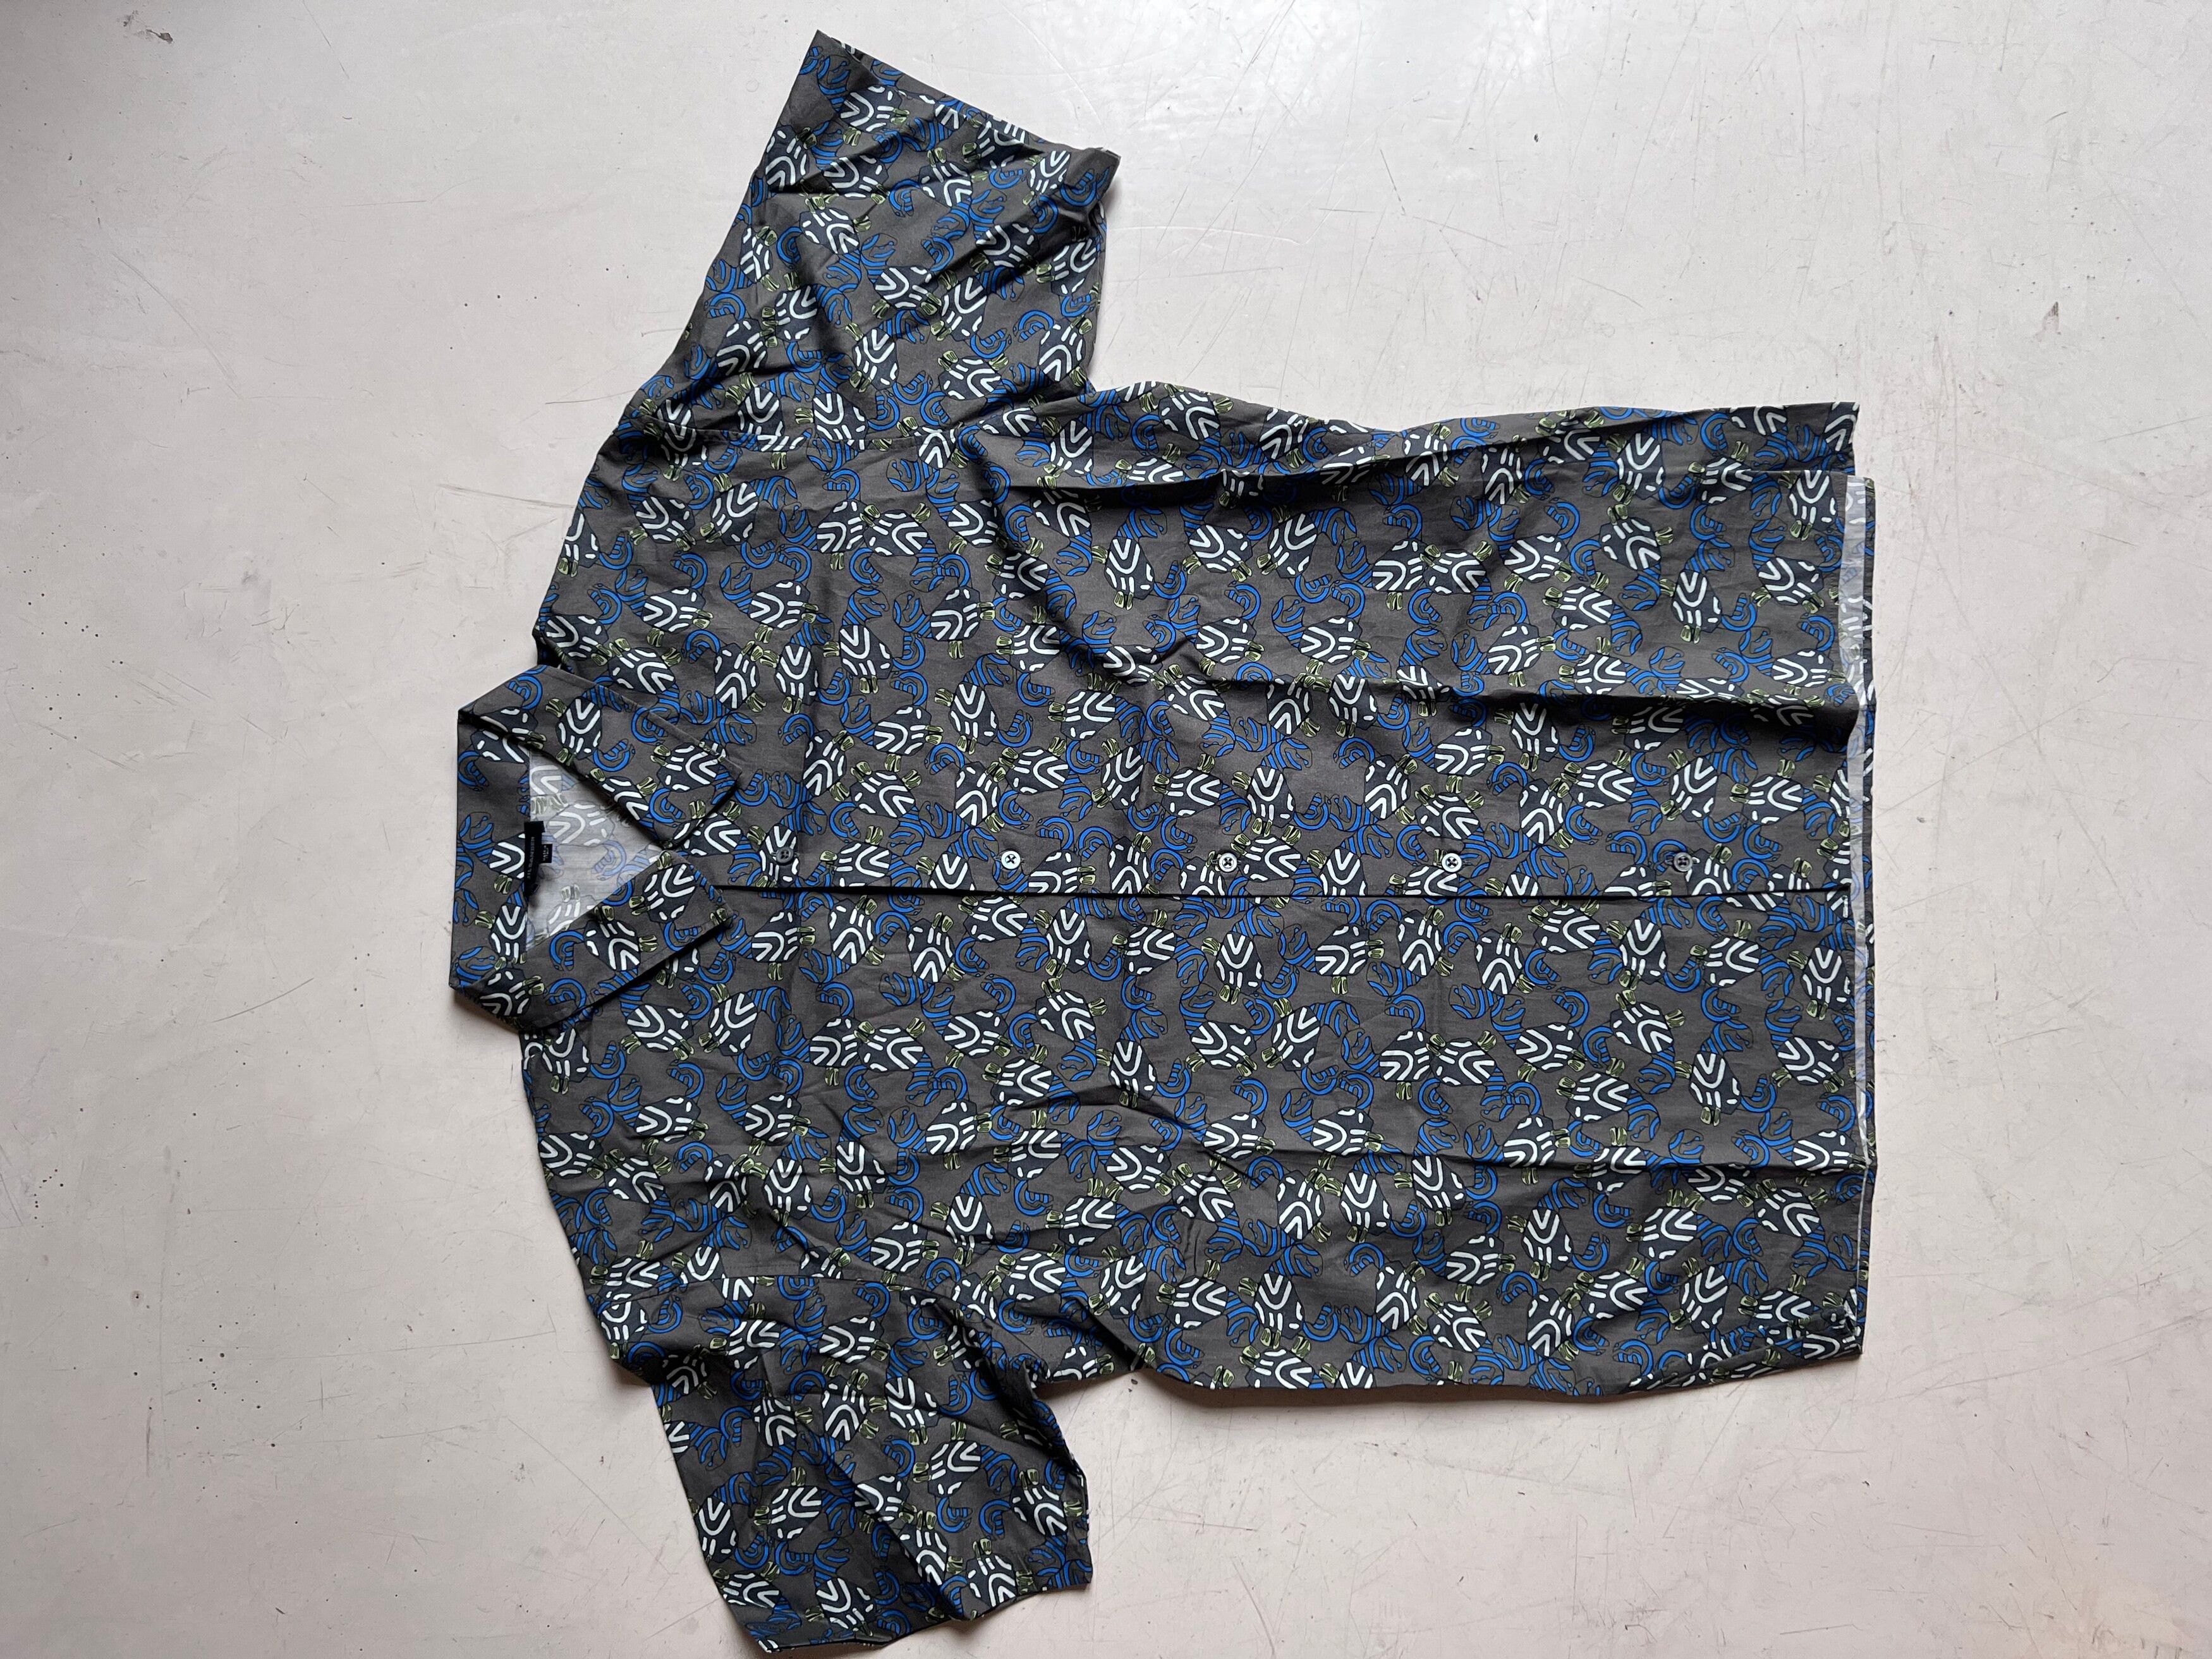 Jil Sander Slim-Fit Printed Cotton-Poplin Shirt Size US S / EU 44-46 / 1 - 1 Preview